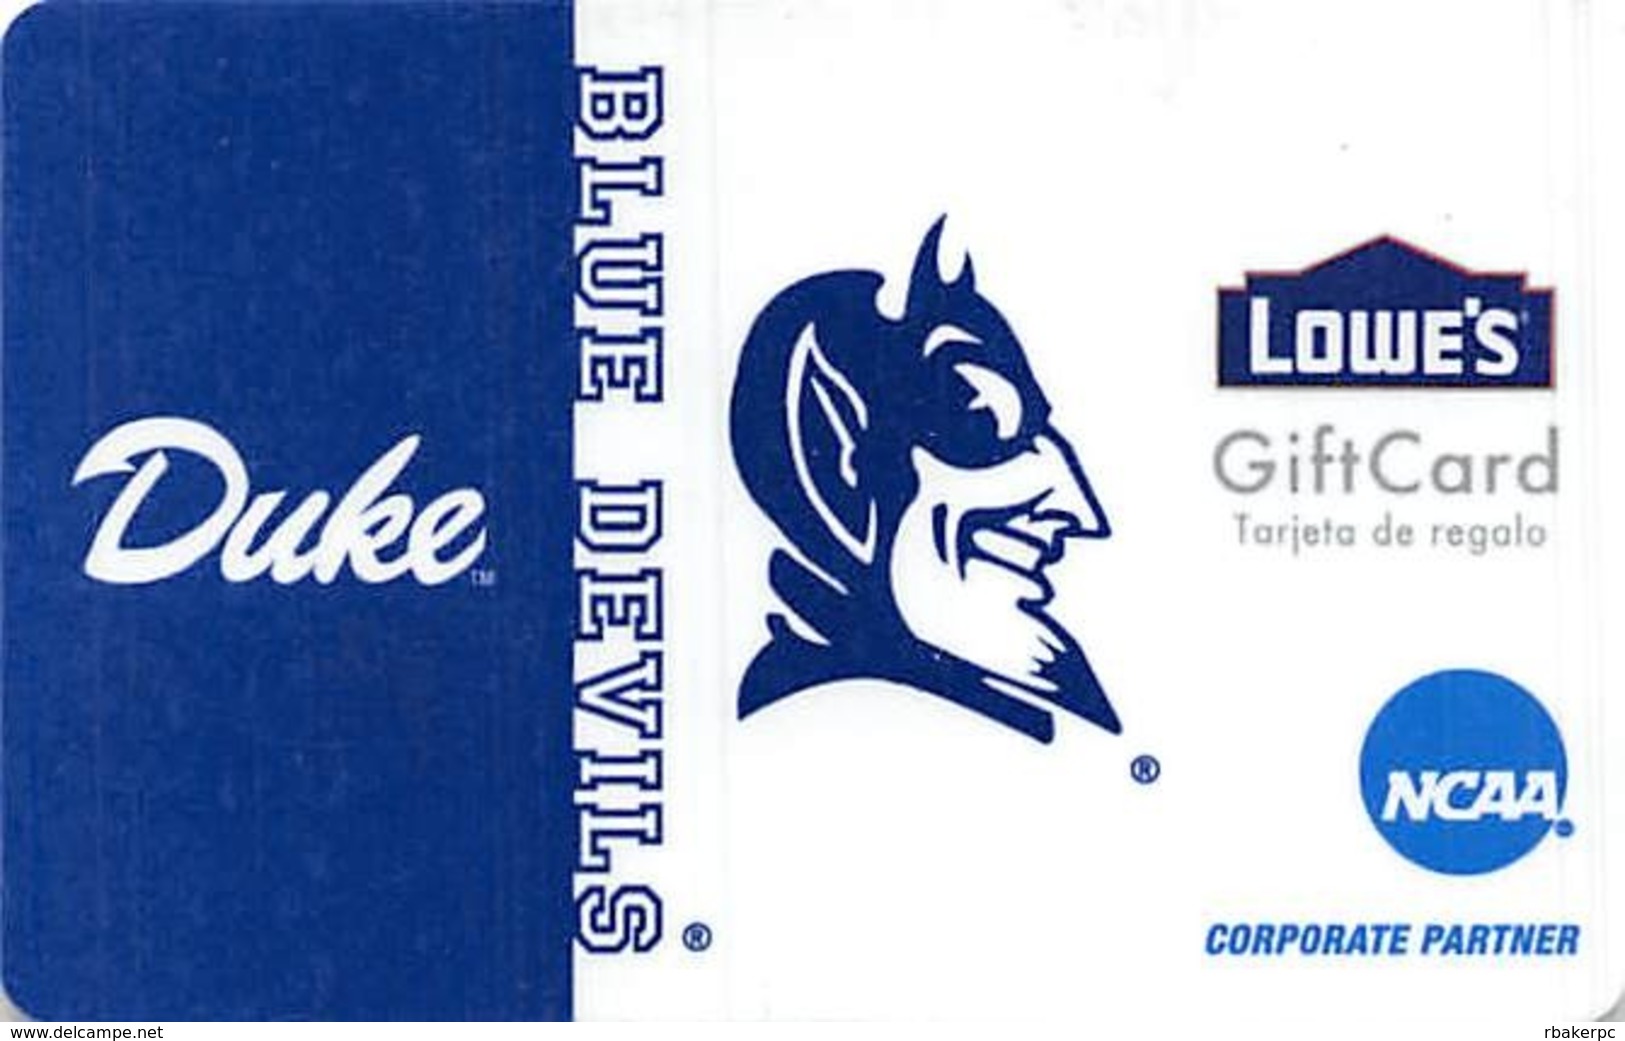 Lowes NCAA Gift Card - Duke Blue Devils - Gift Cards